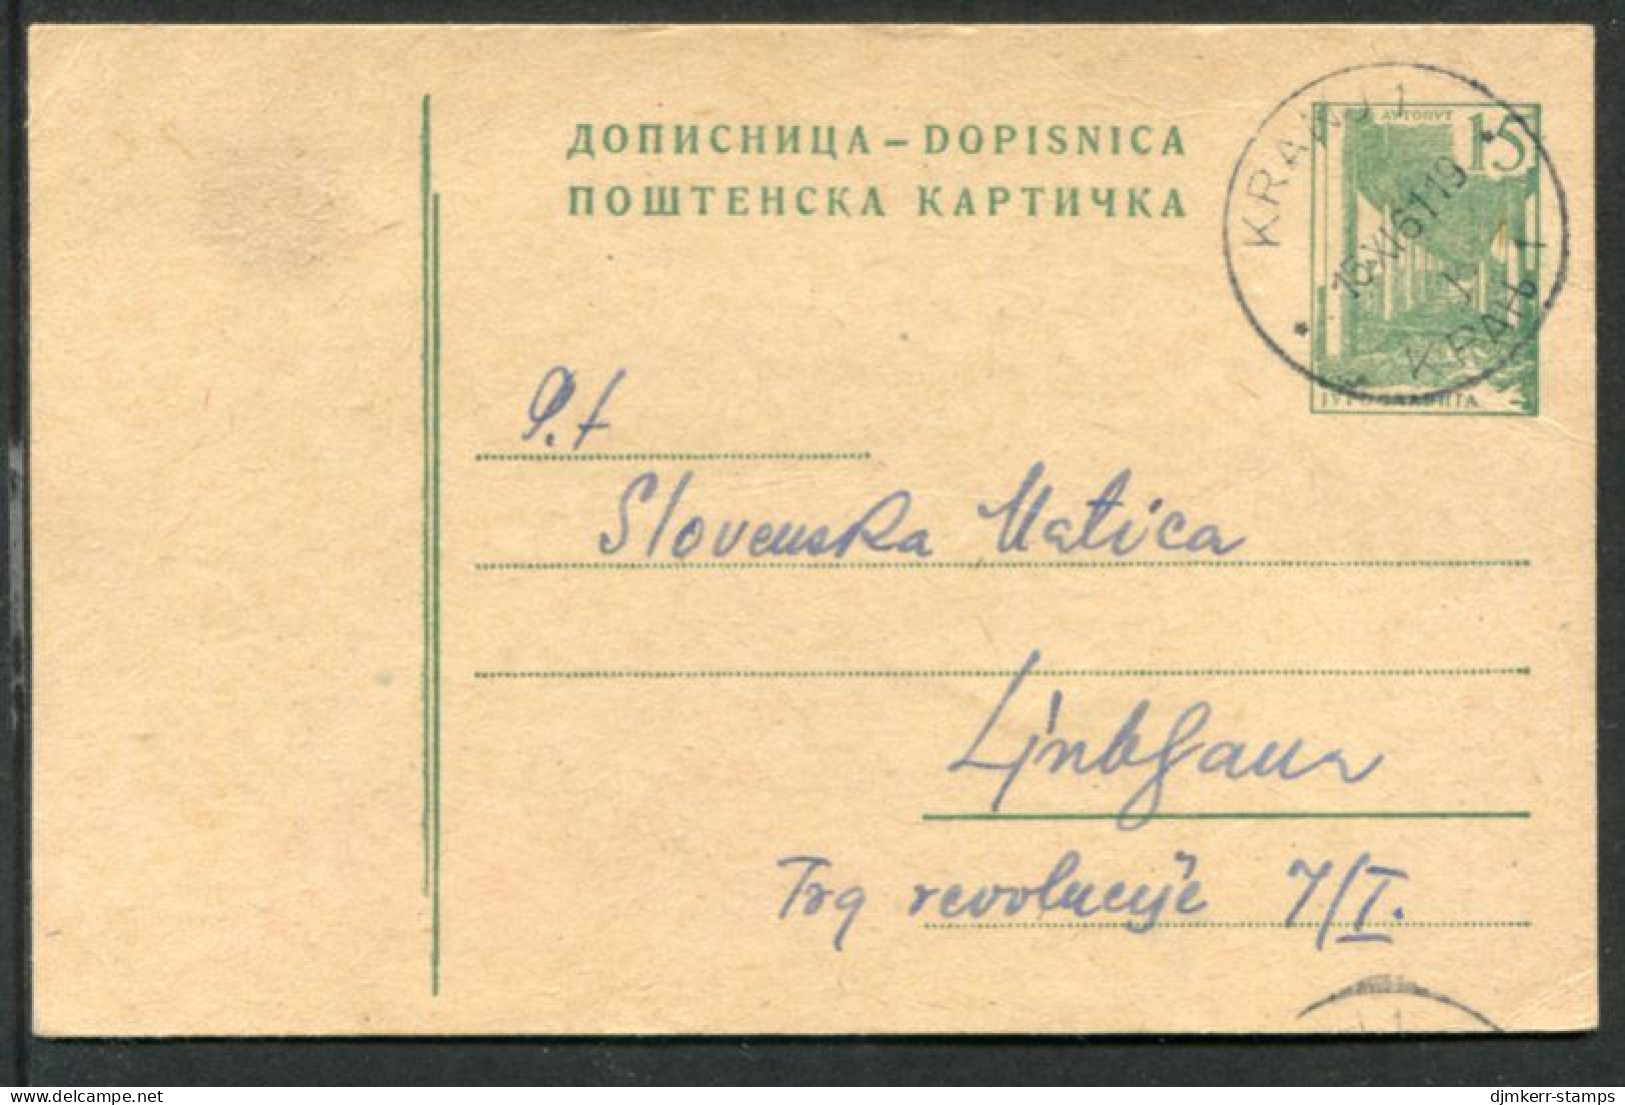 YUGOSLAVIA 1959 Buildings 15 (d) Postal Stationery Card, Used.  Michel P159a - Ganzsachen